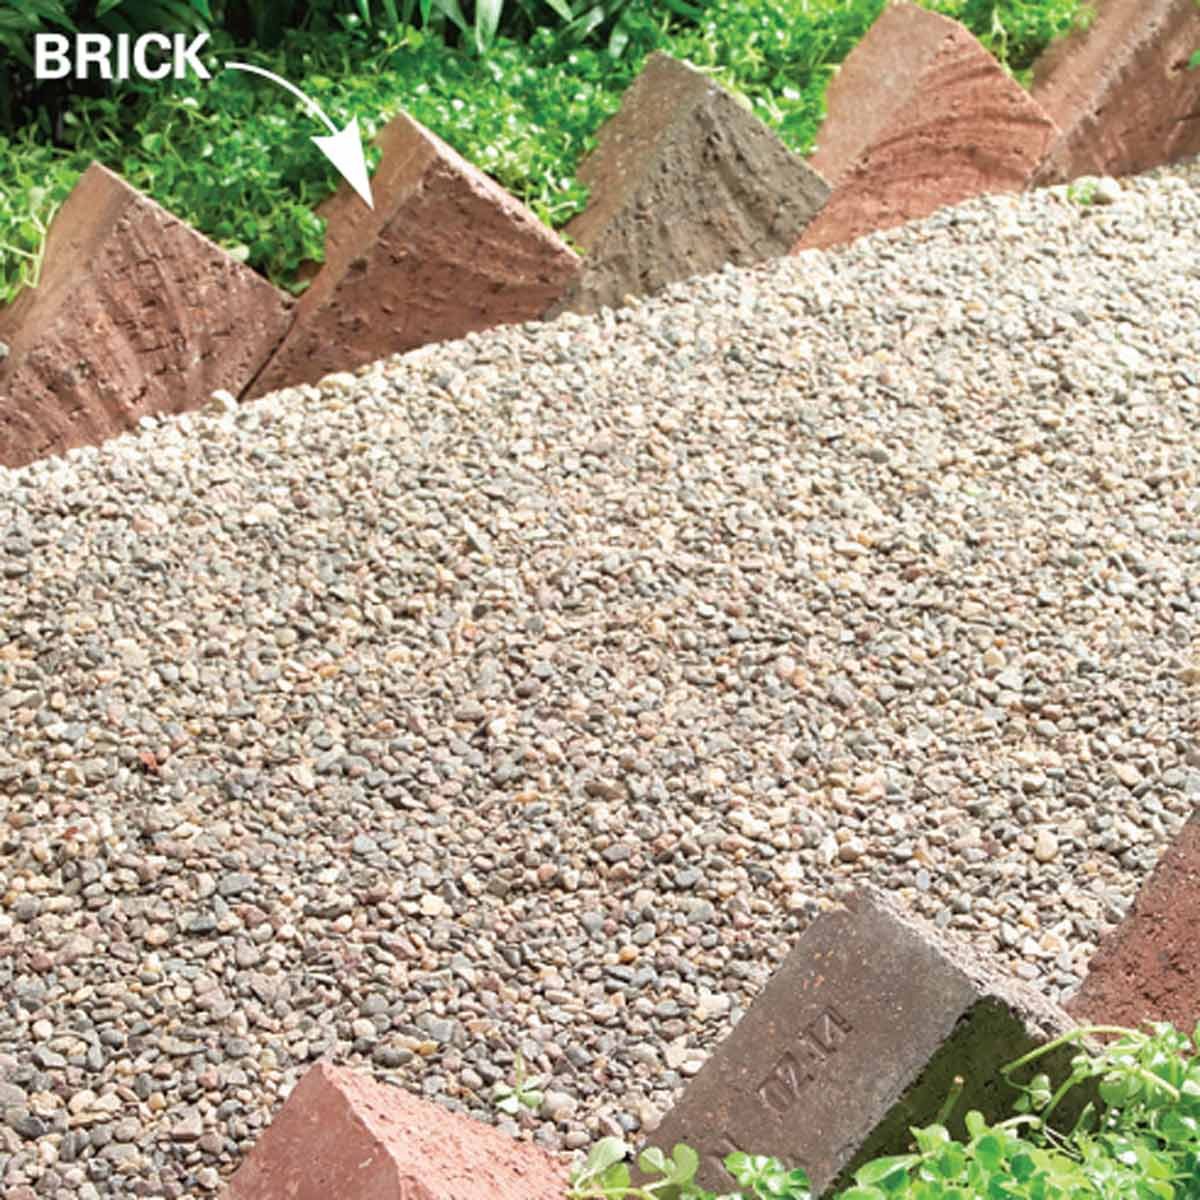 brick edging on a gravel path